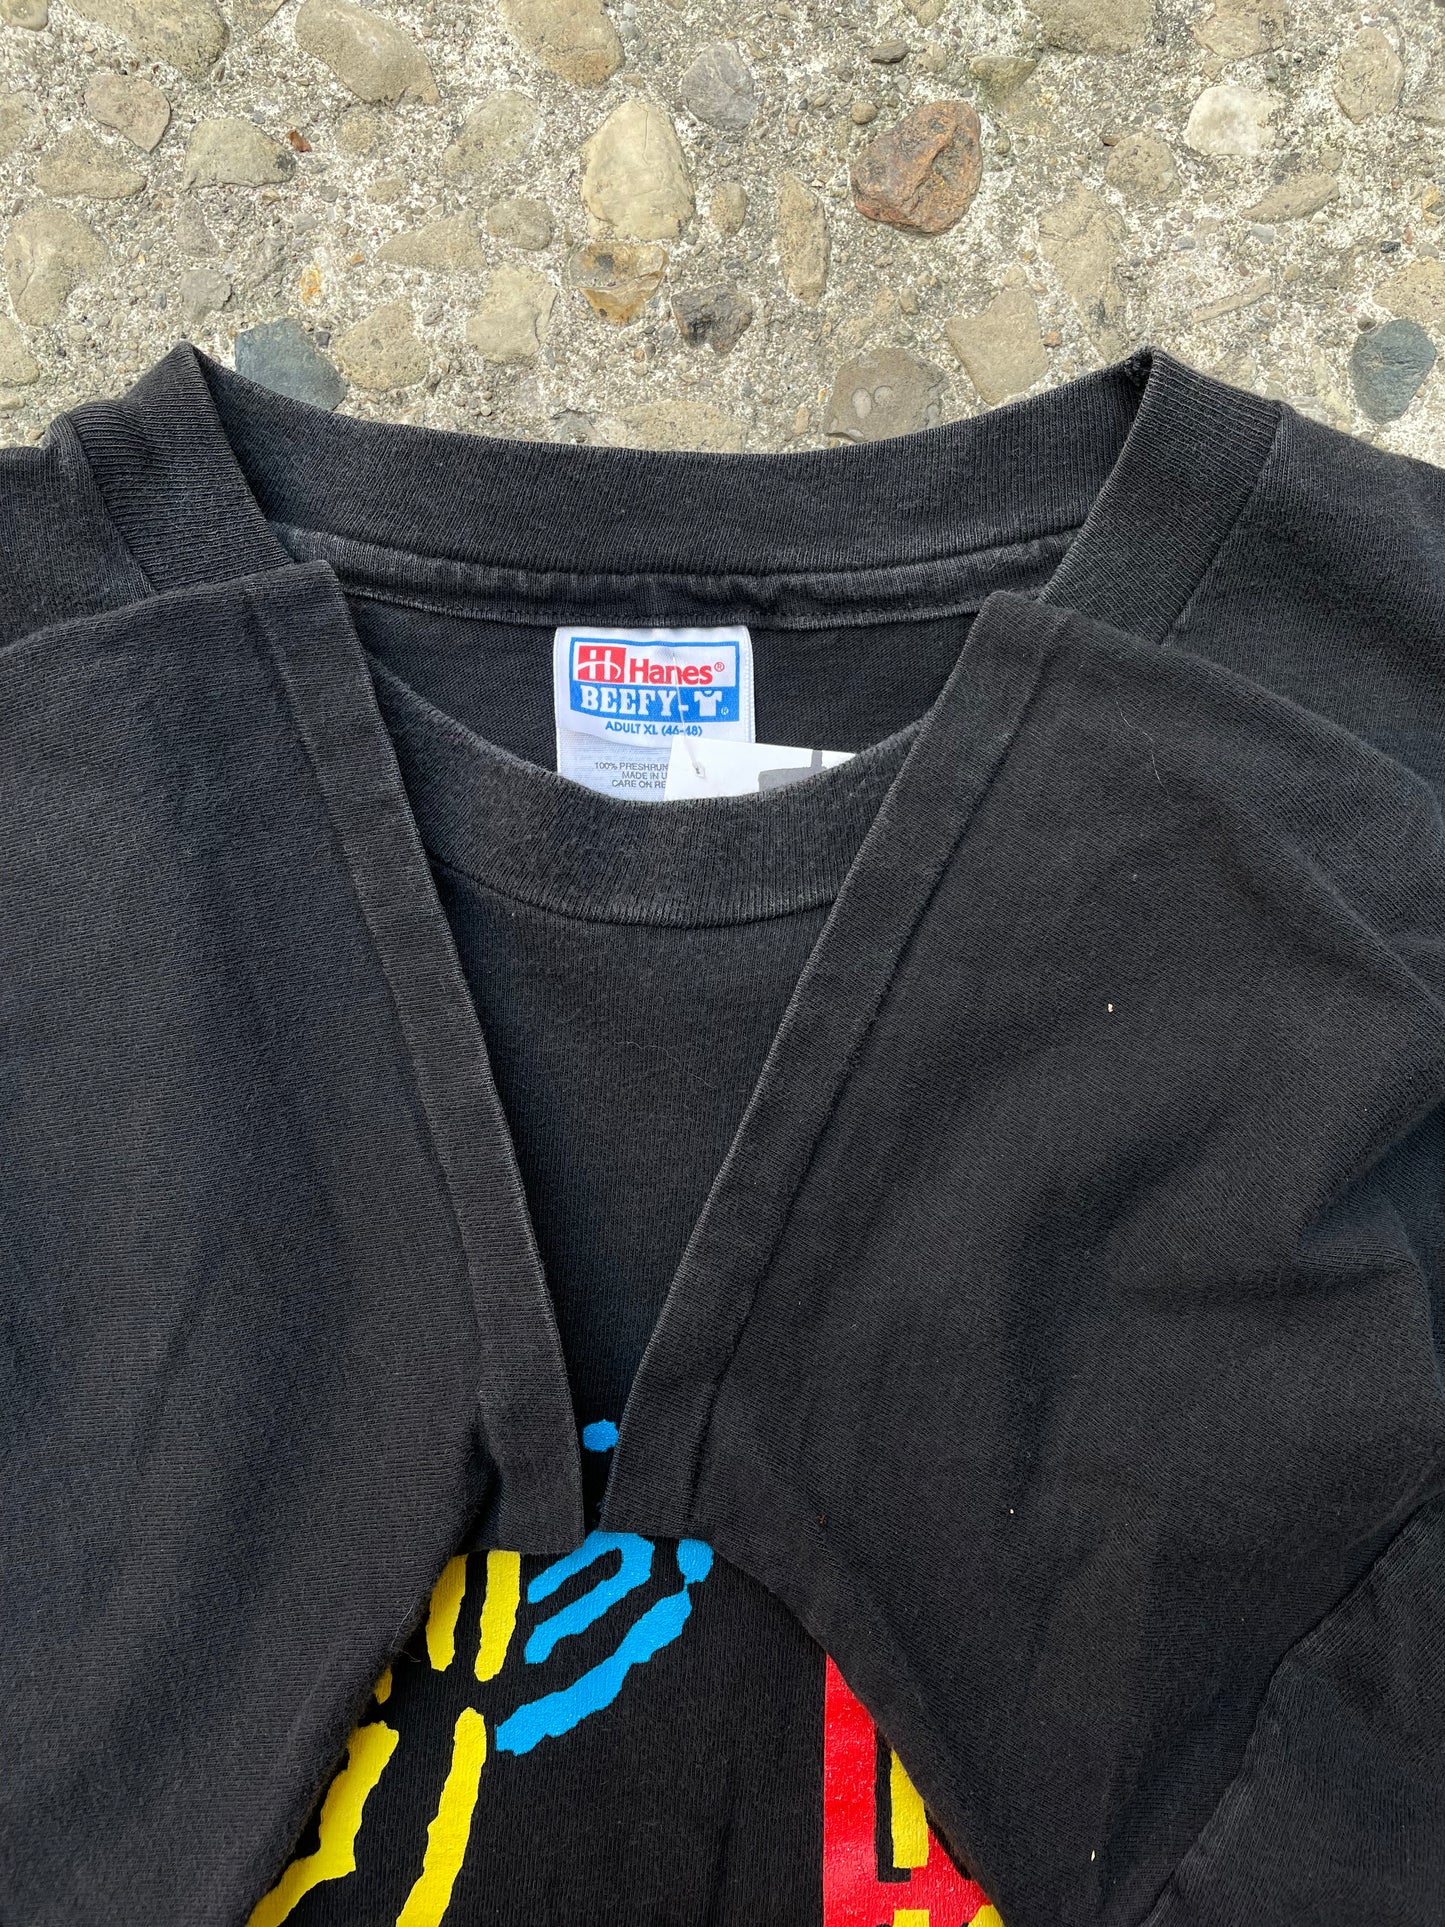 1990's Unitron Kids Klub Graphic T-Shirt - XL